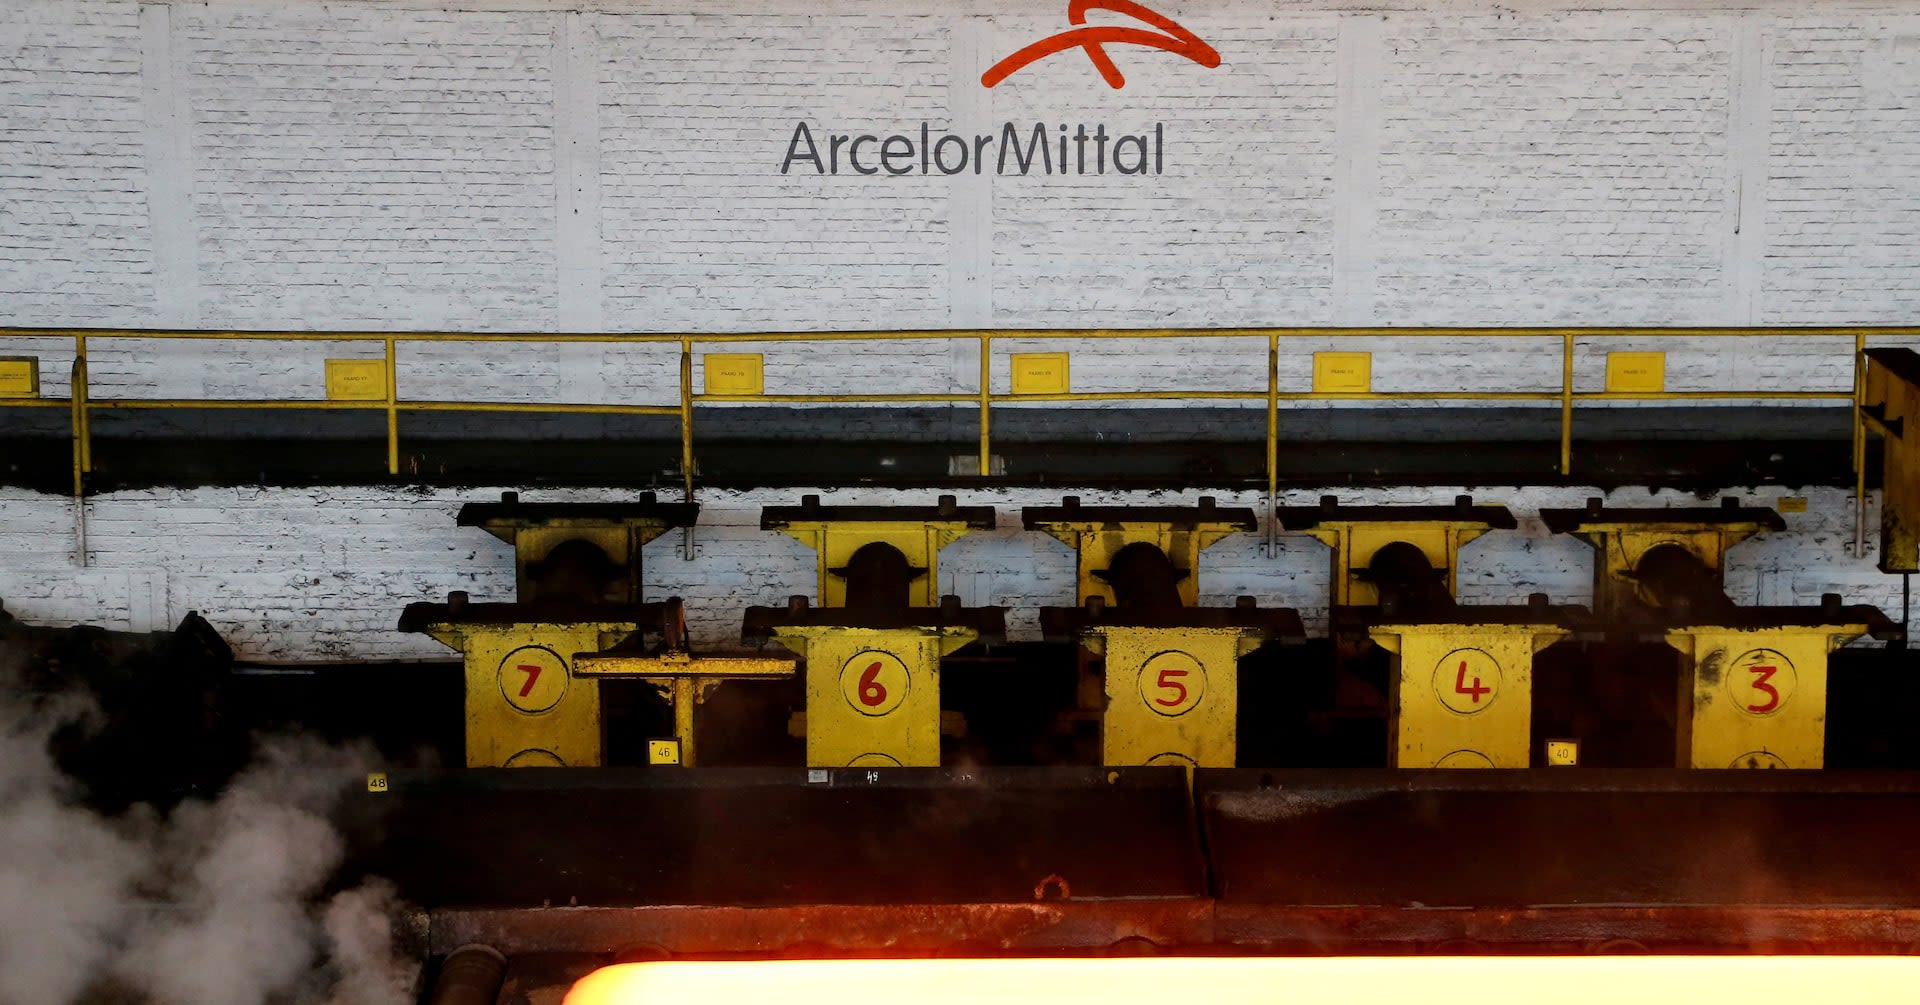 ArcelorMittal, MHI launch pilot CO2 capture unit at Gent blast furnace